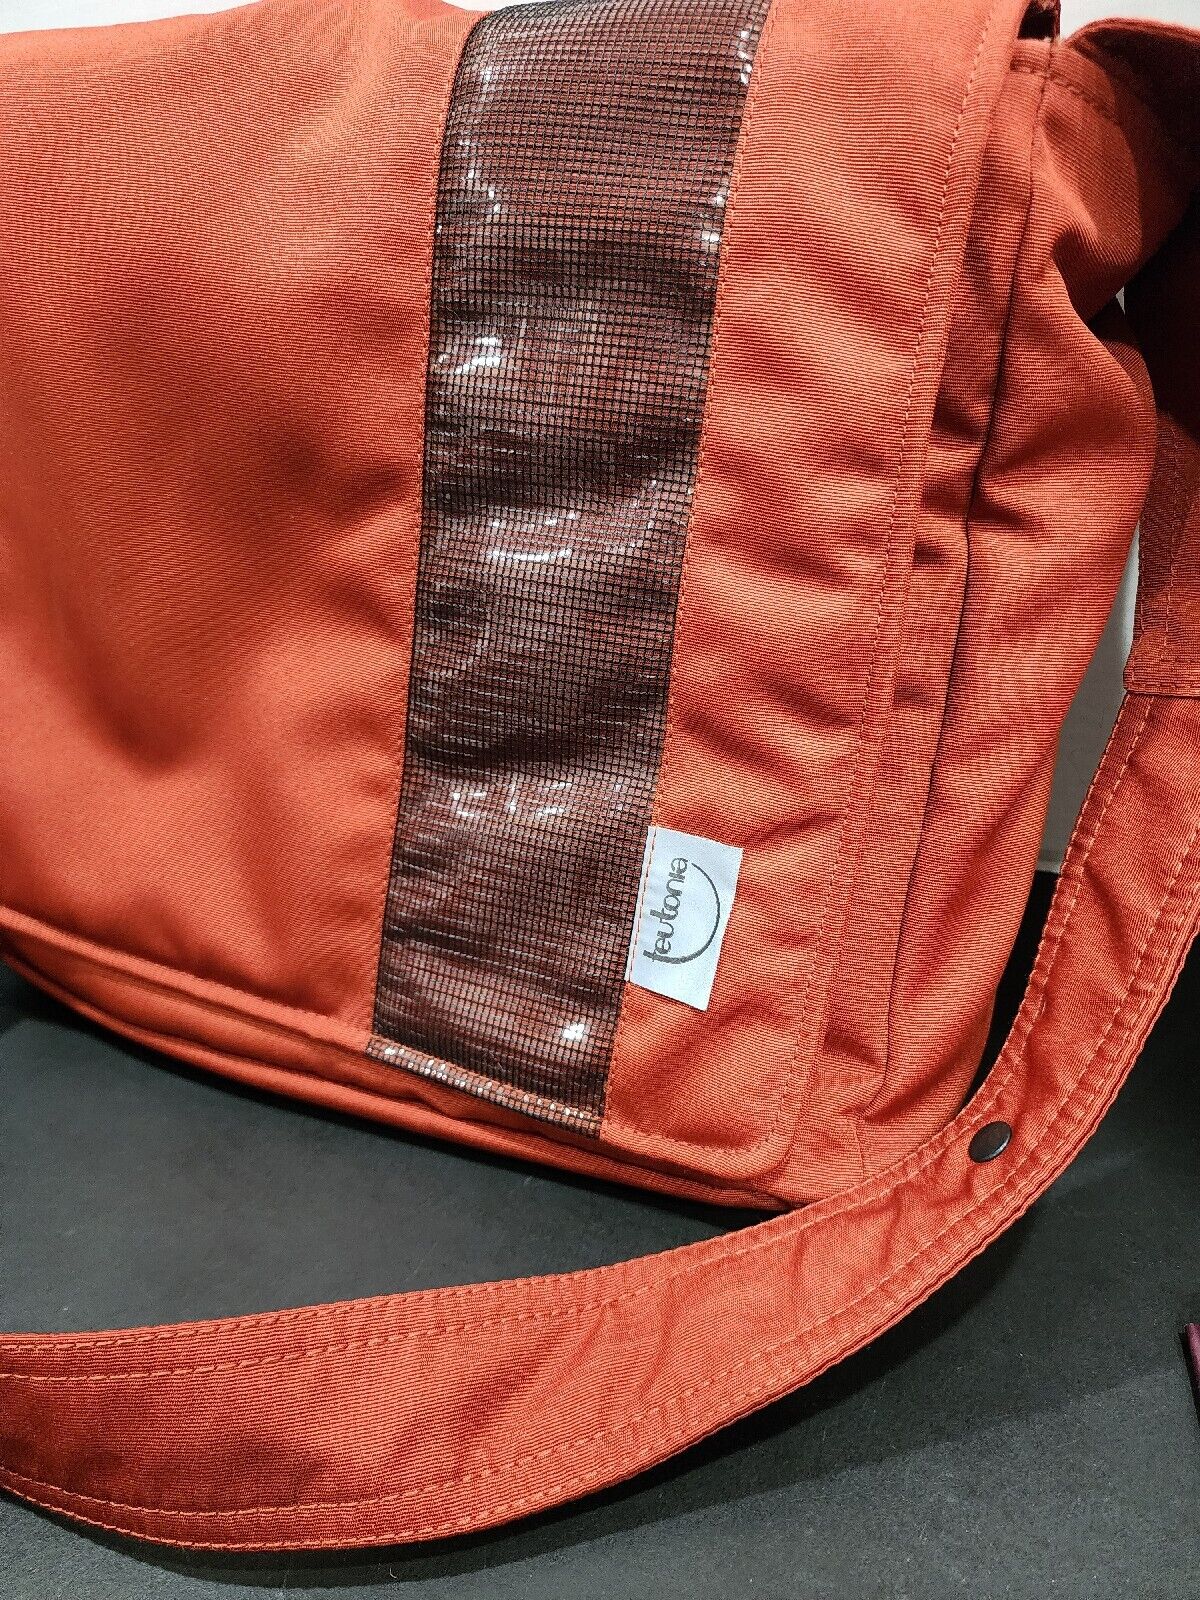 Teutonia Burnt Orange Diaper Bag Changer Bag New Insulator teutonia